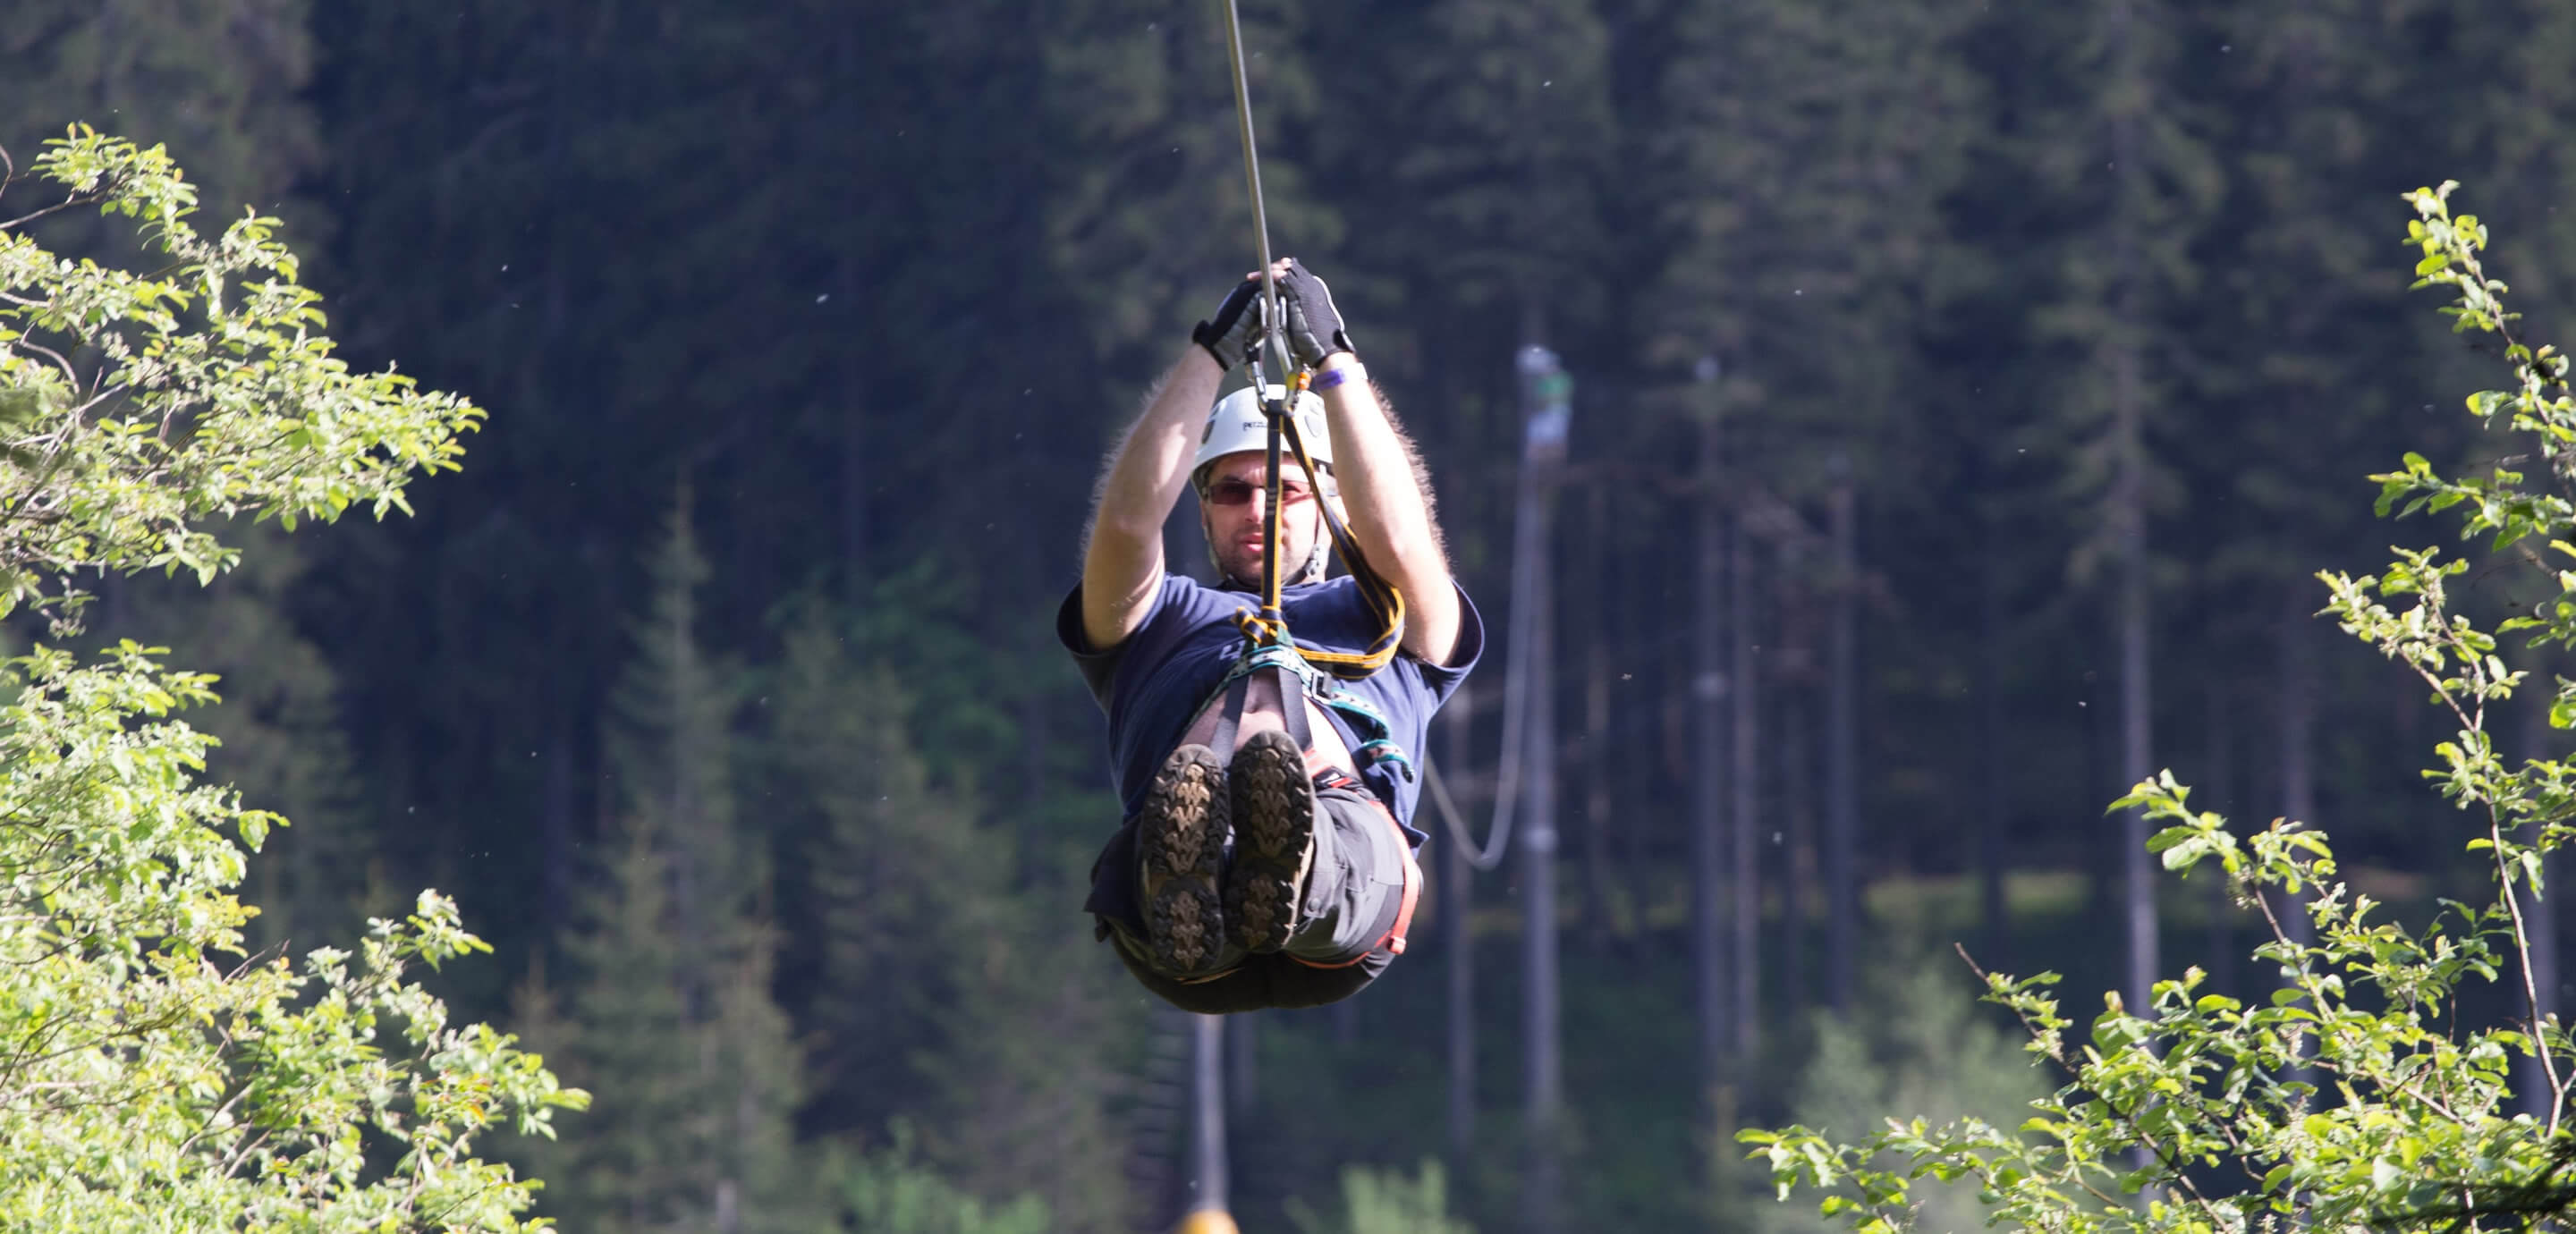 Office - Mures - Adventure park stories - testing the longest zipline in Central Europe